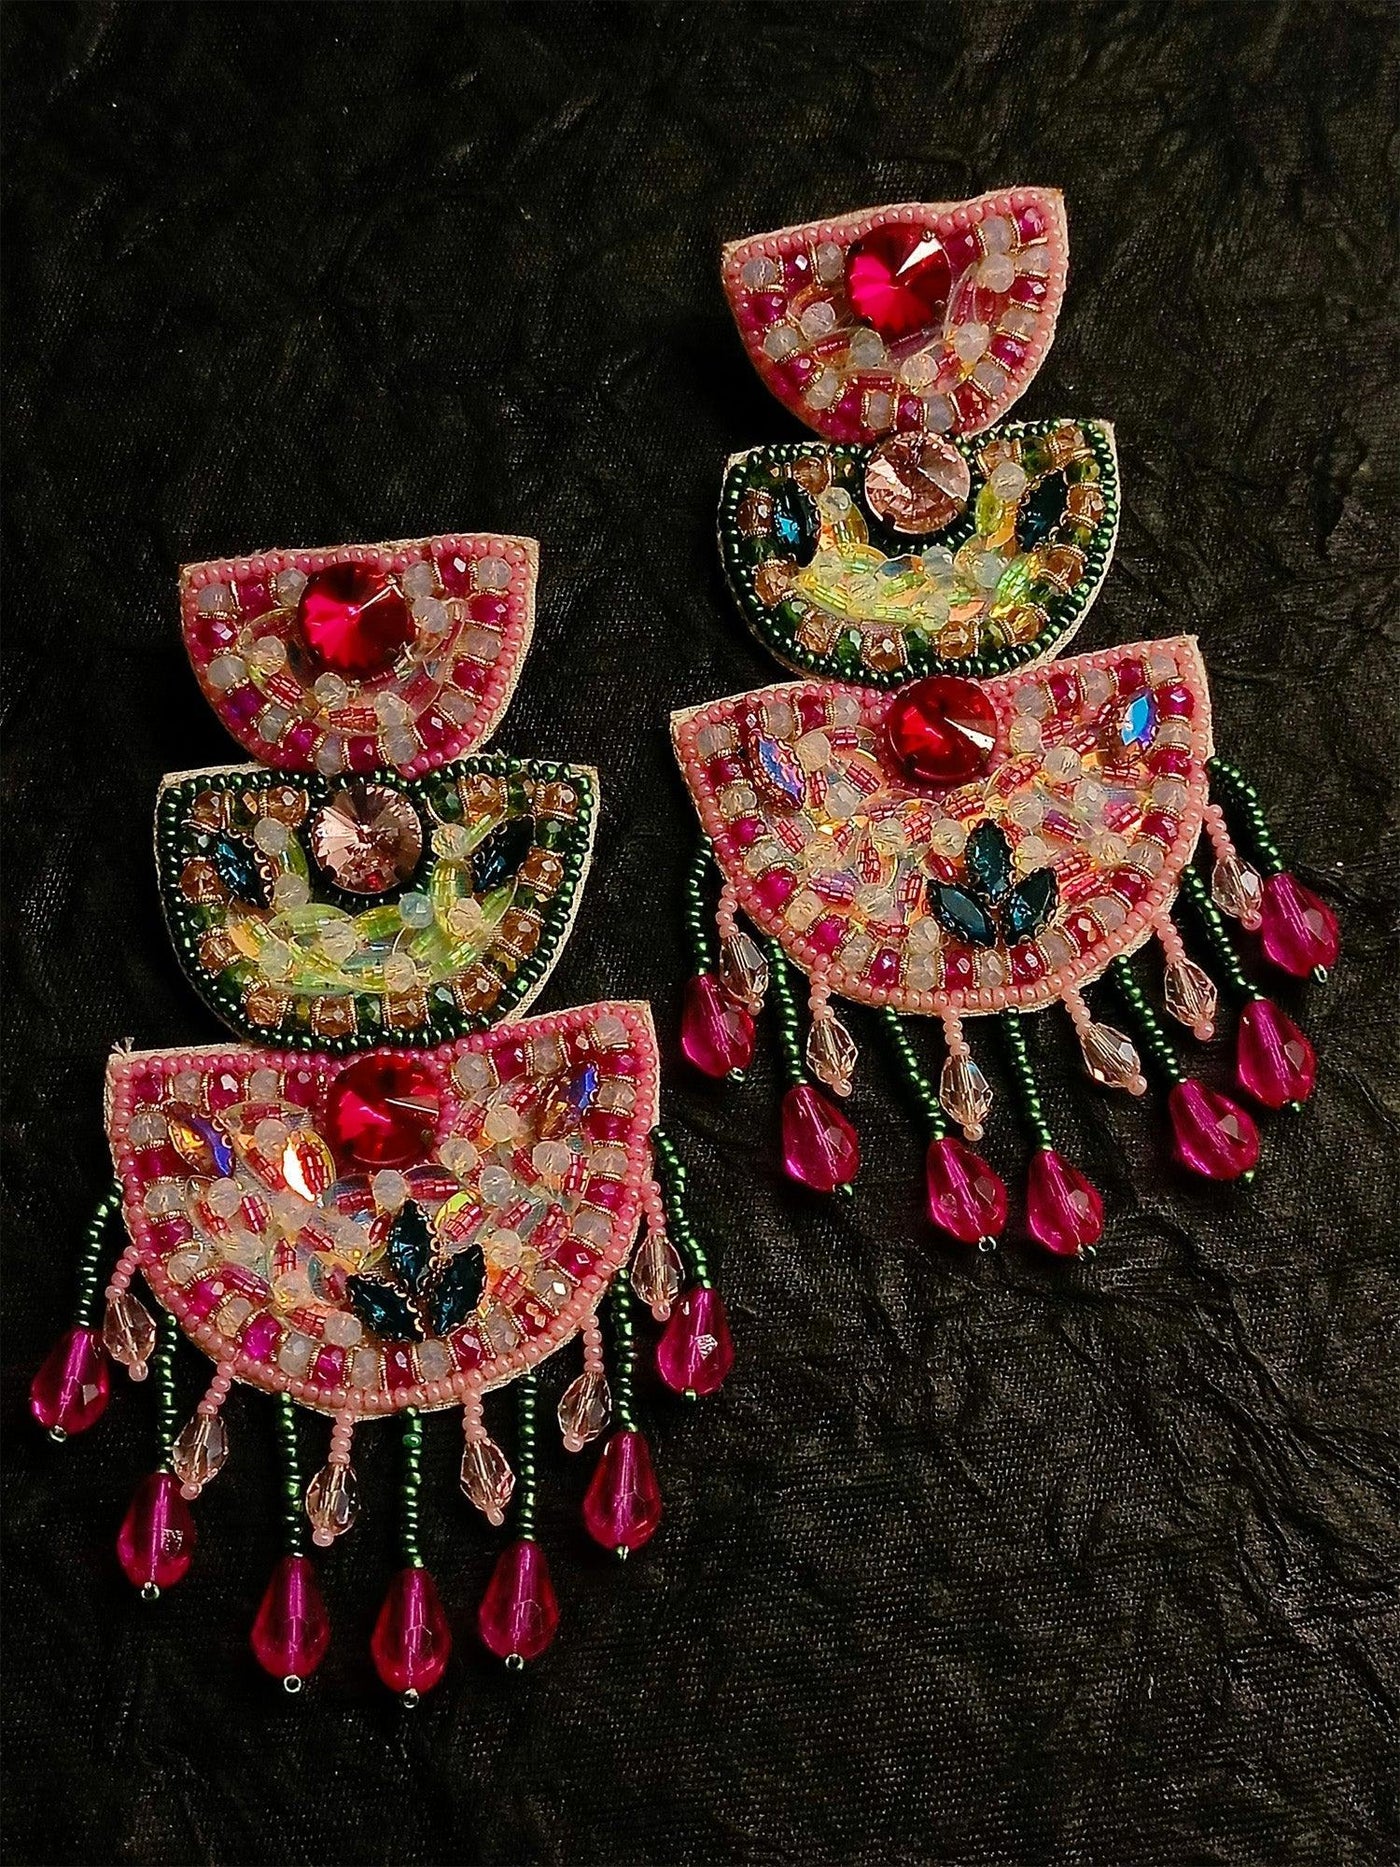 Bharvi P & G Handmade Earrings - Uboric